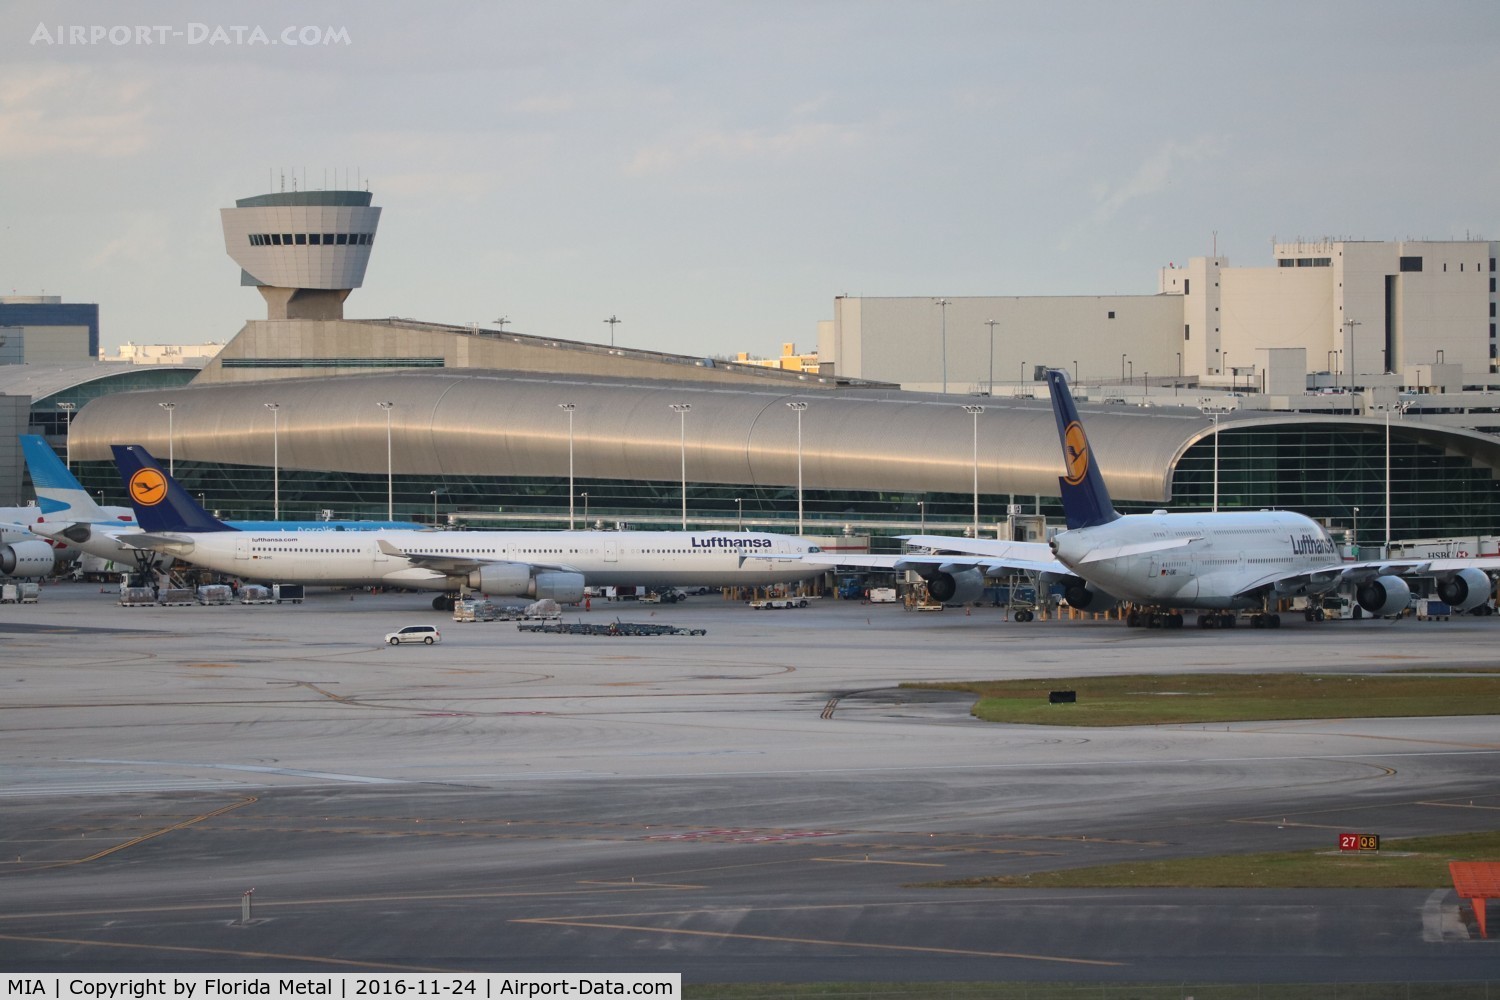 Miami International Airport (MIA) - International terminal